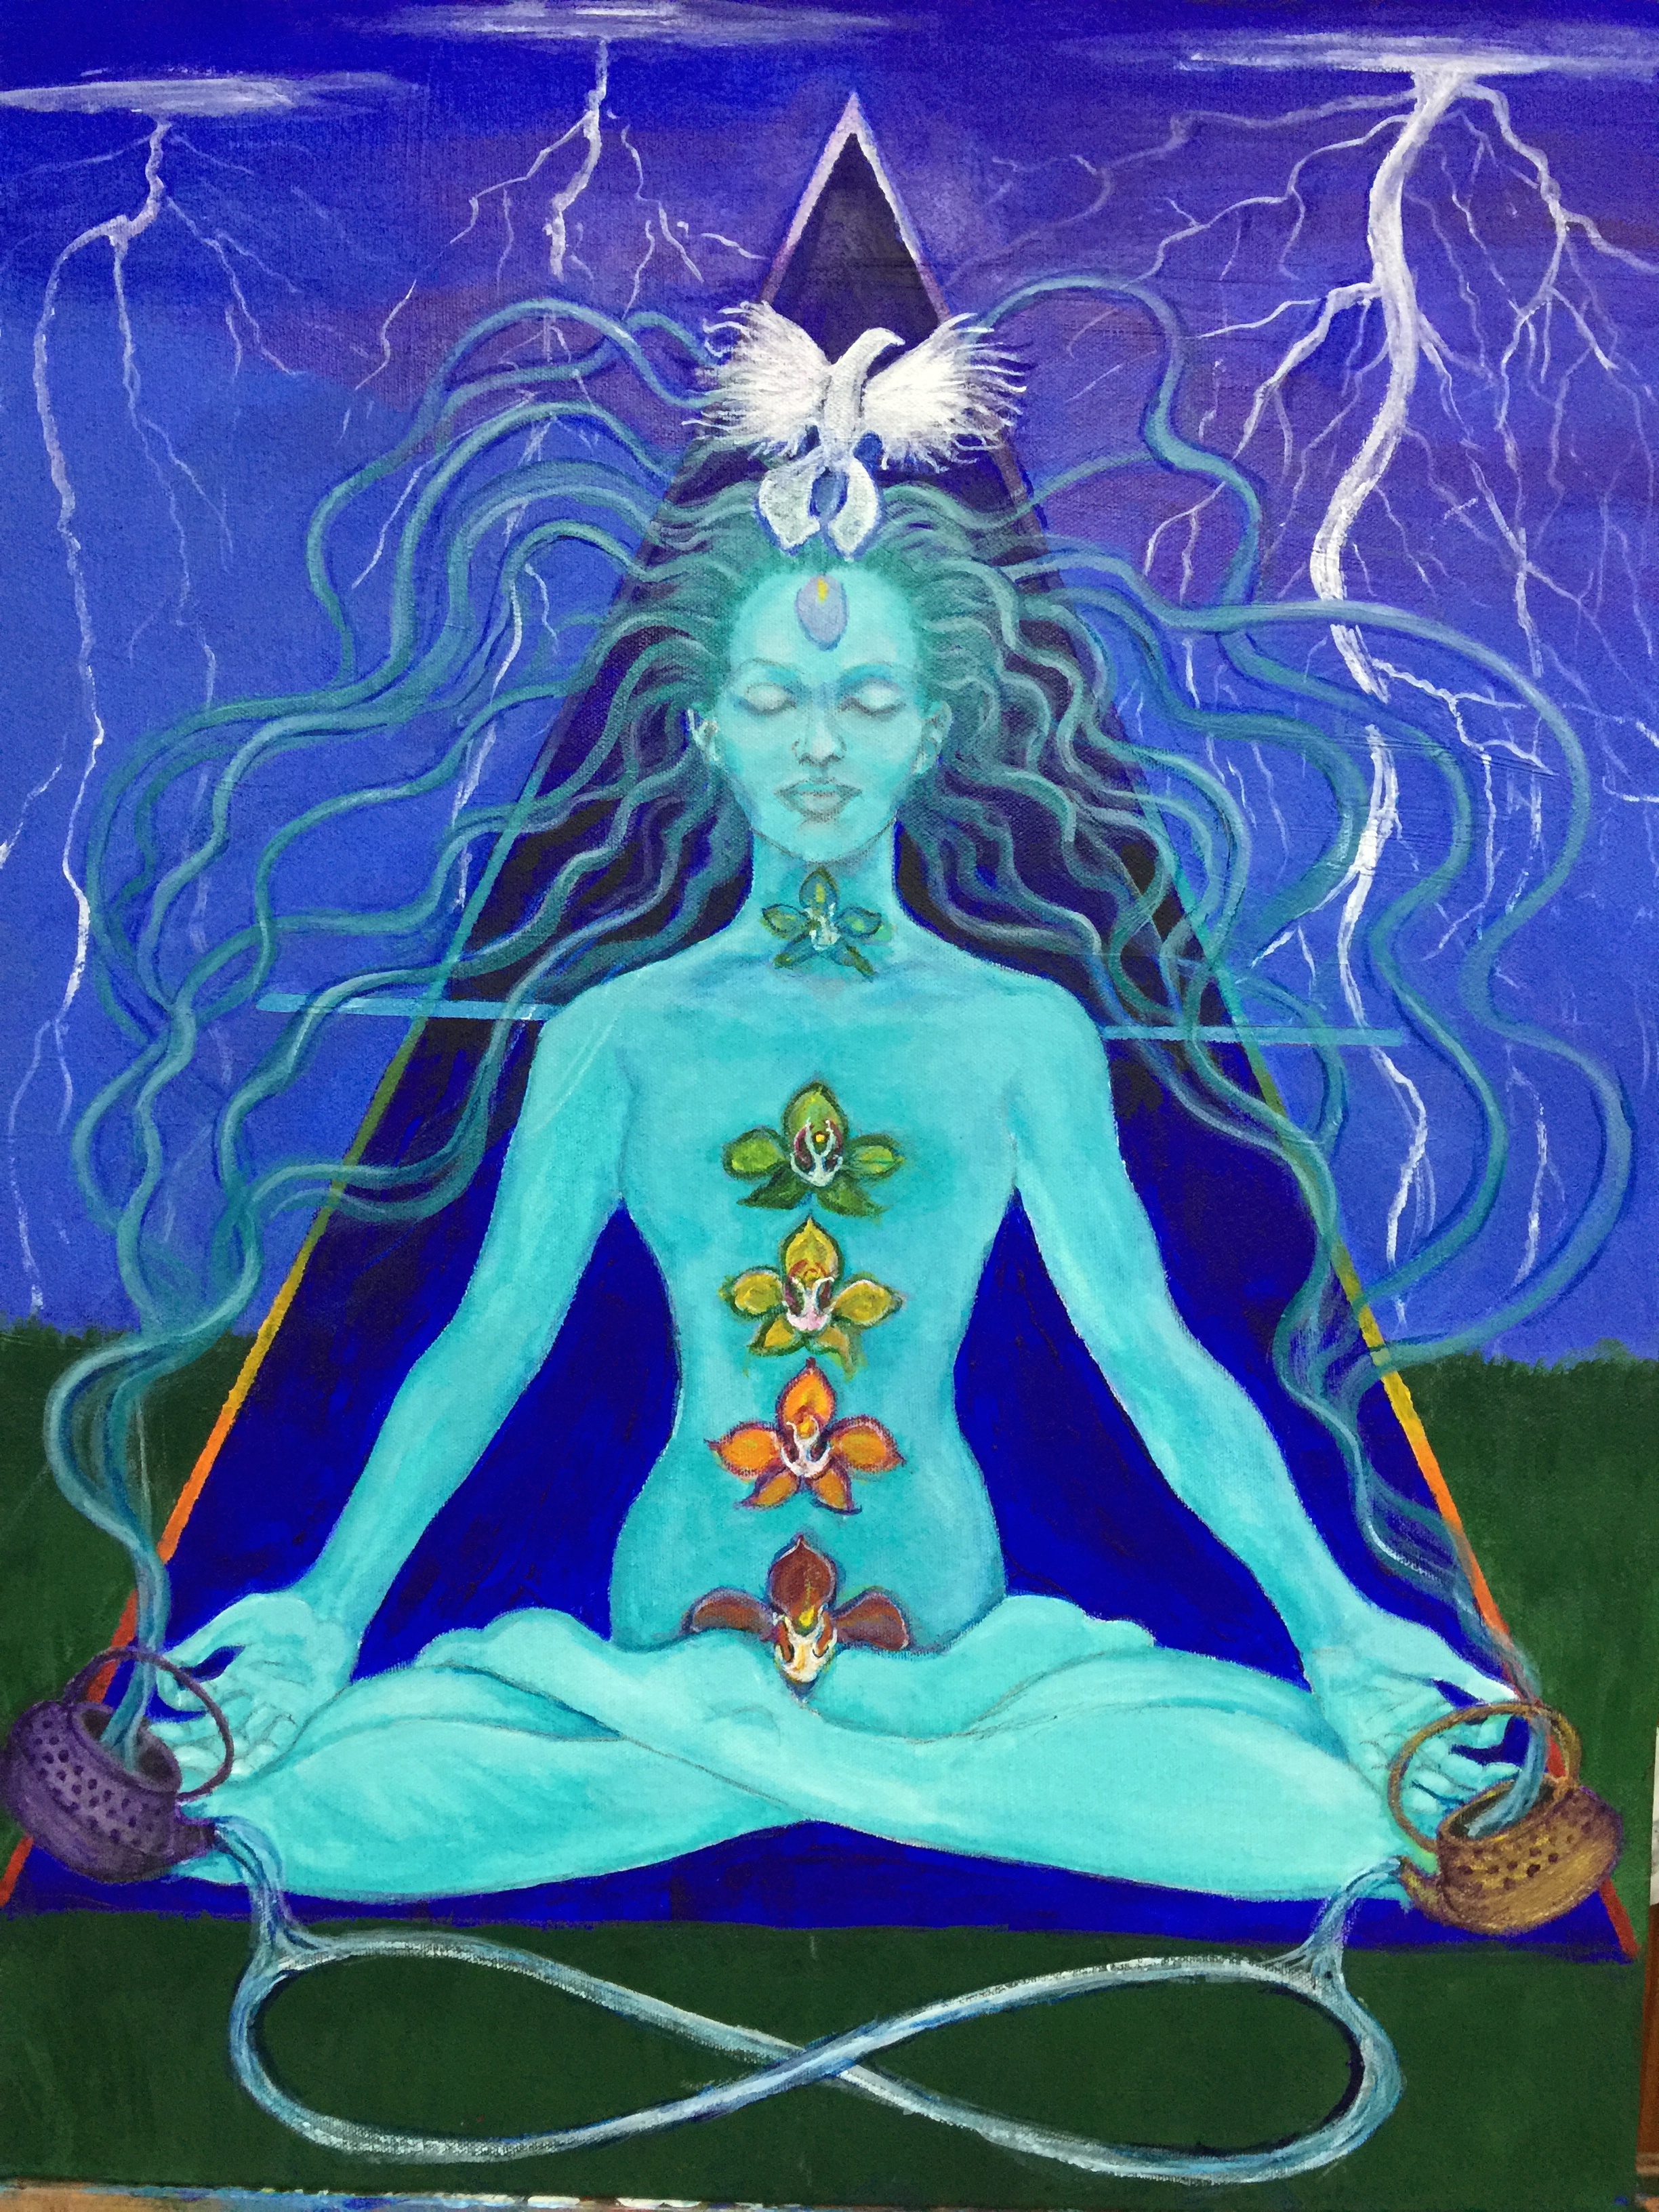 Meditation, Cosmos, Community, Spiritual, Spirituality, Community